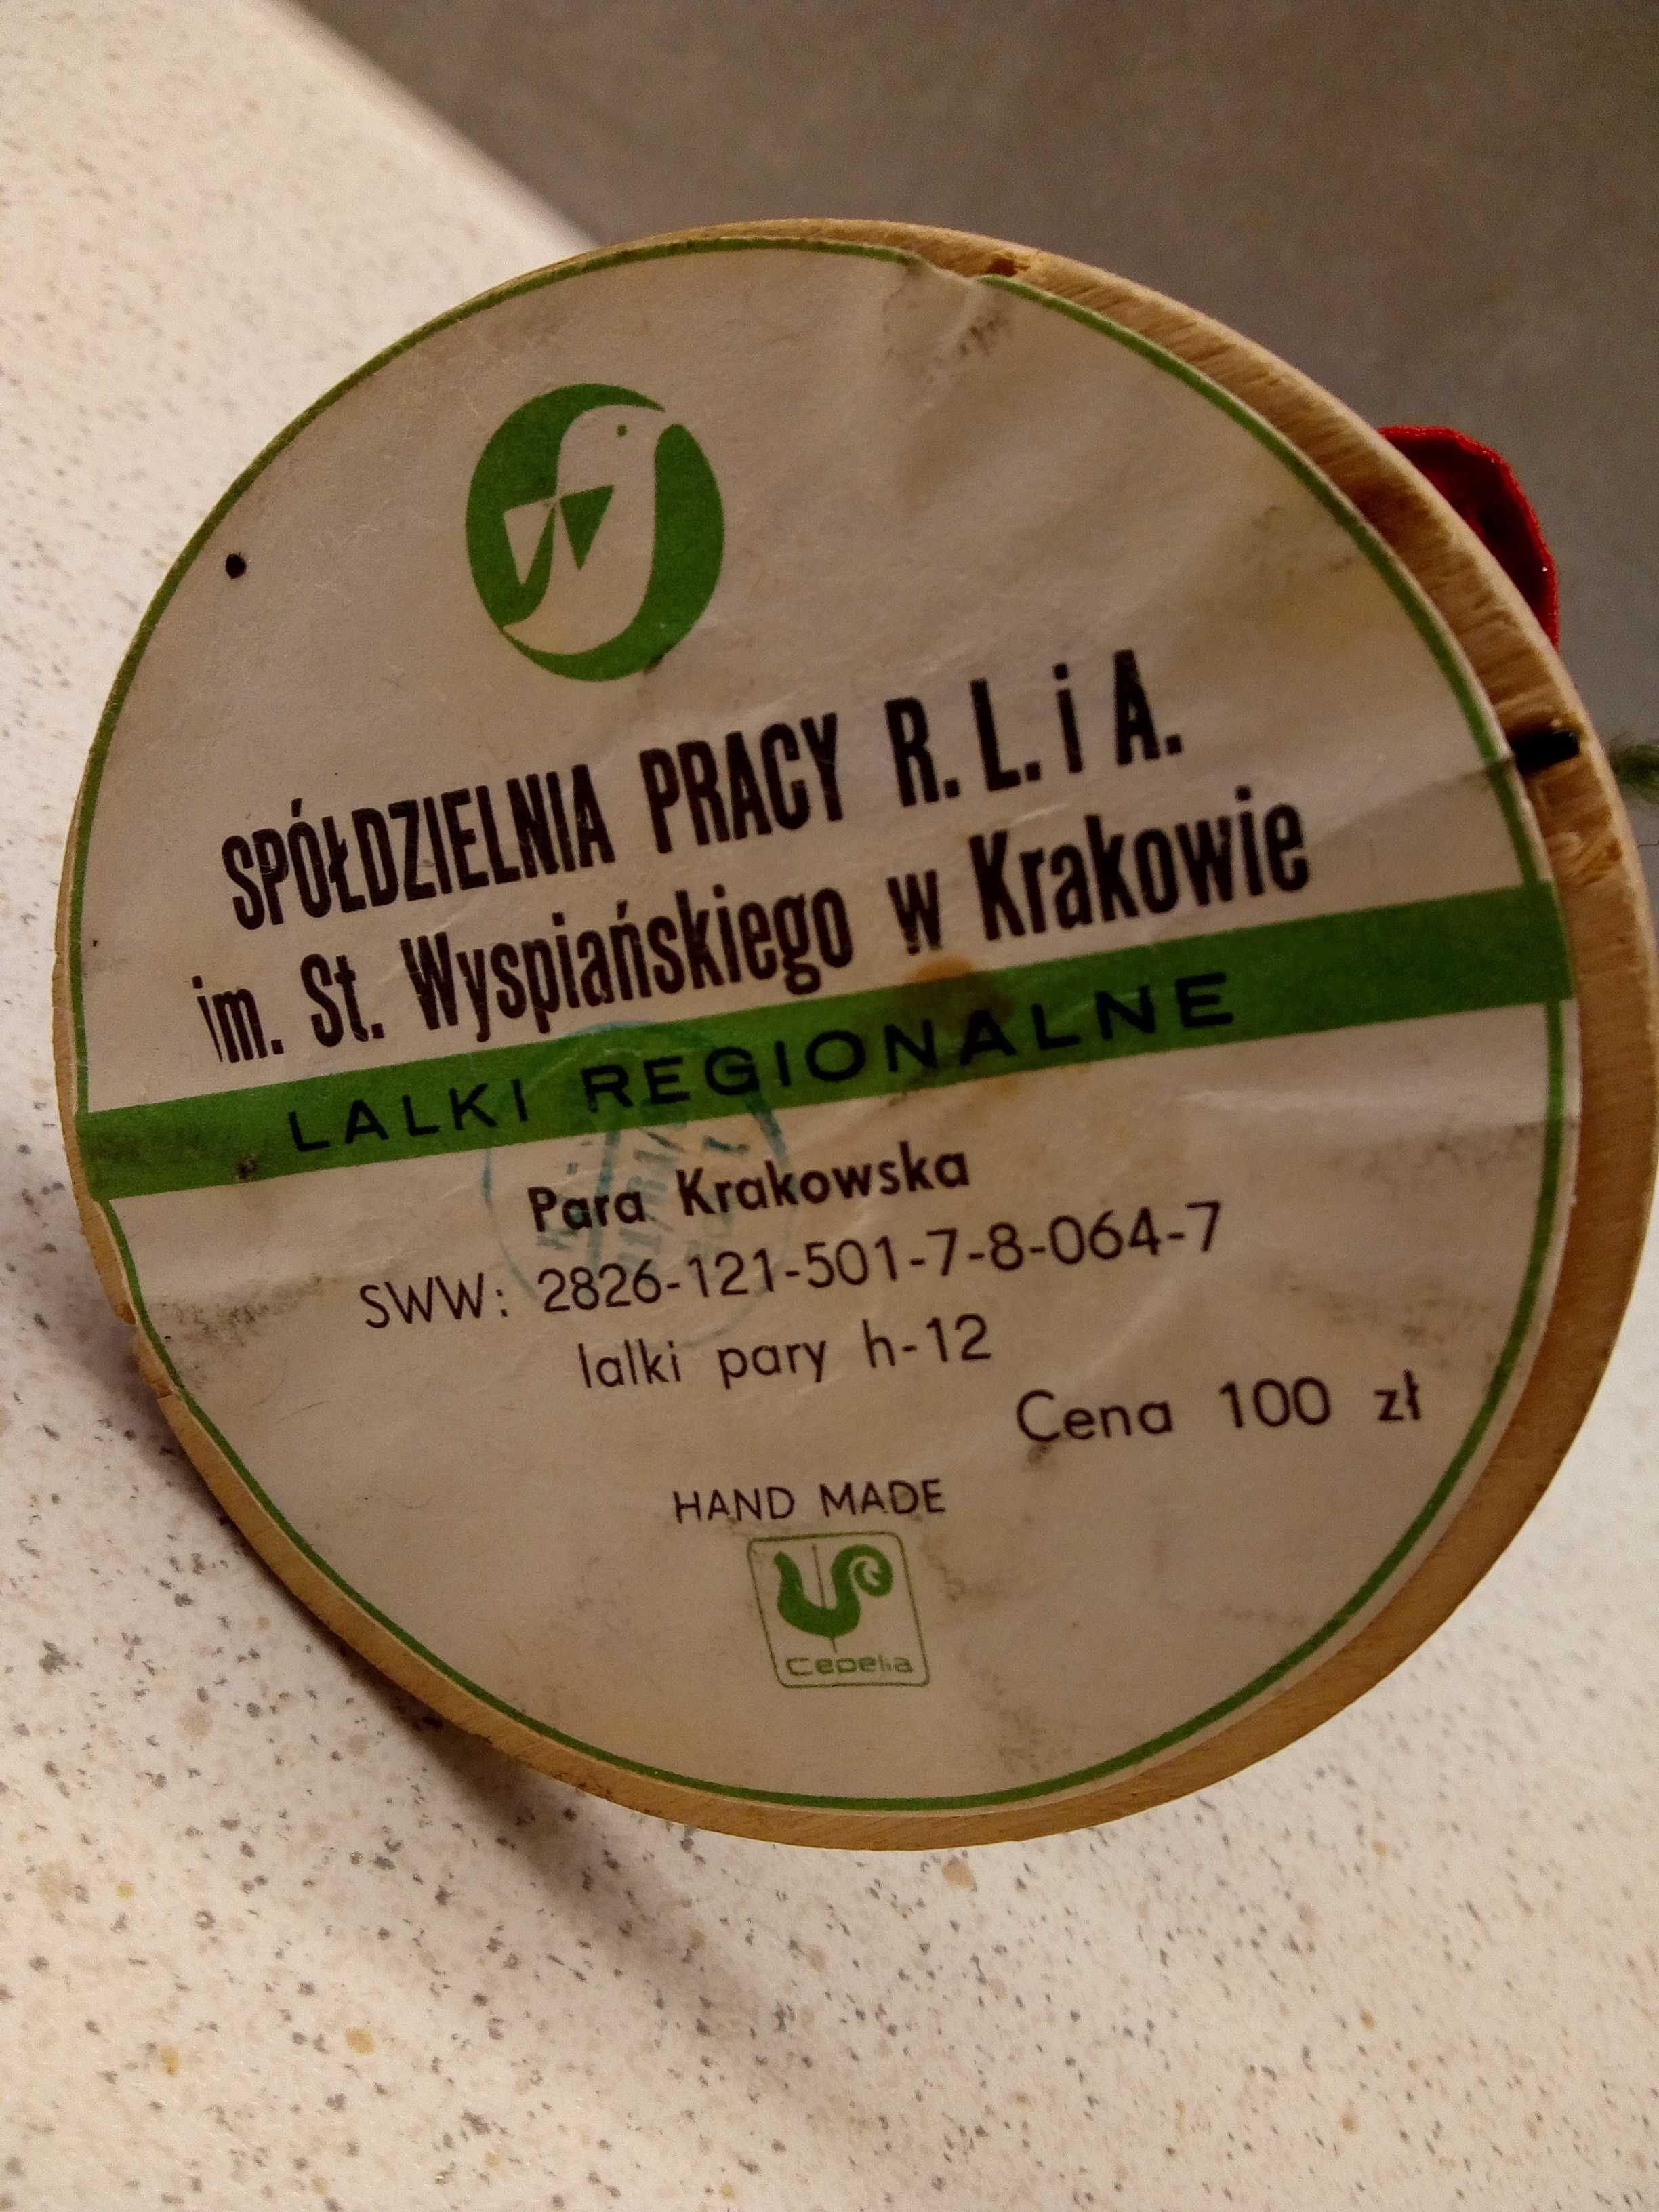 Cepelia Para Krakowska lalka regionalna PRL Krakowianka